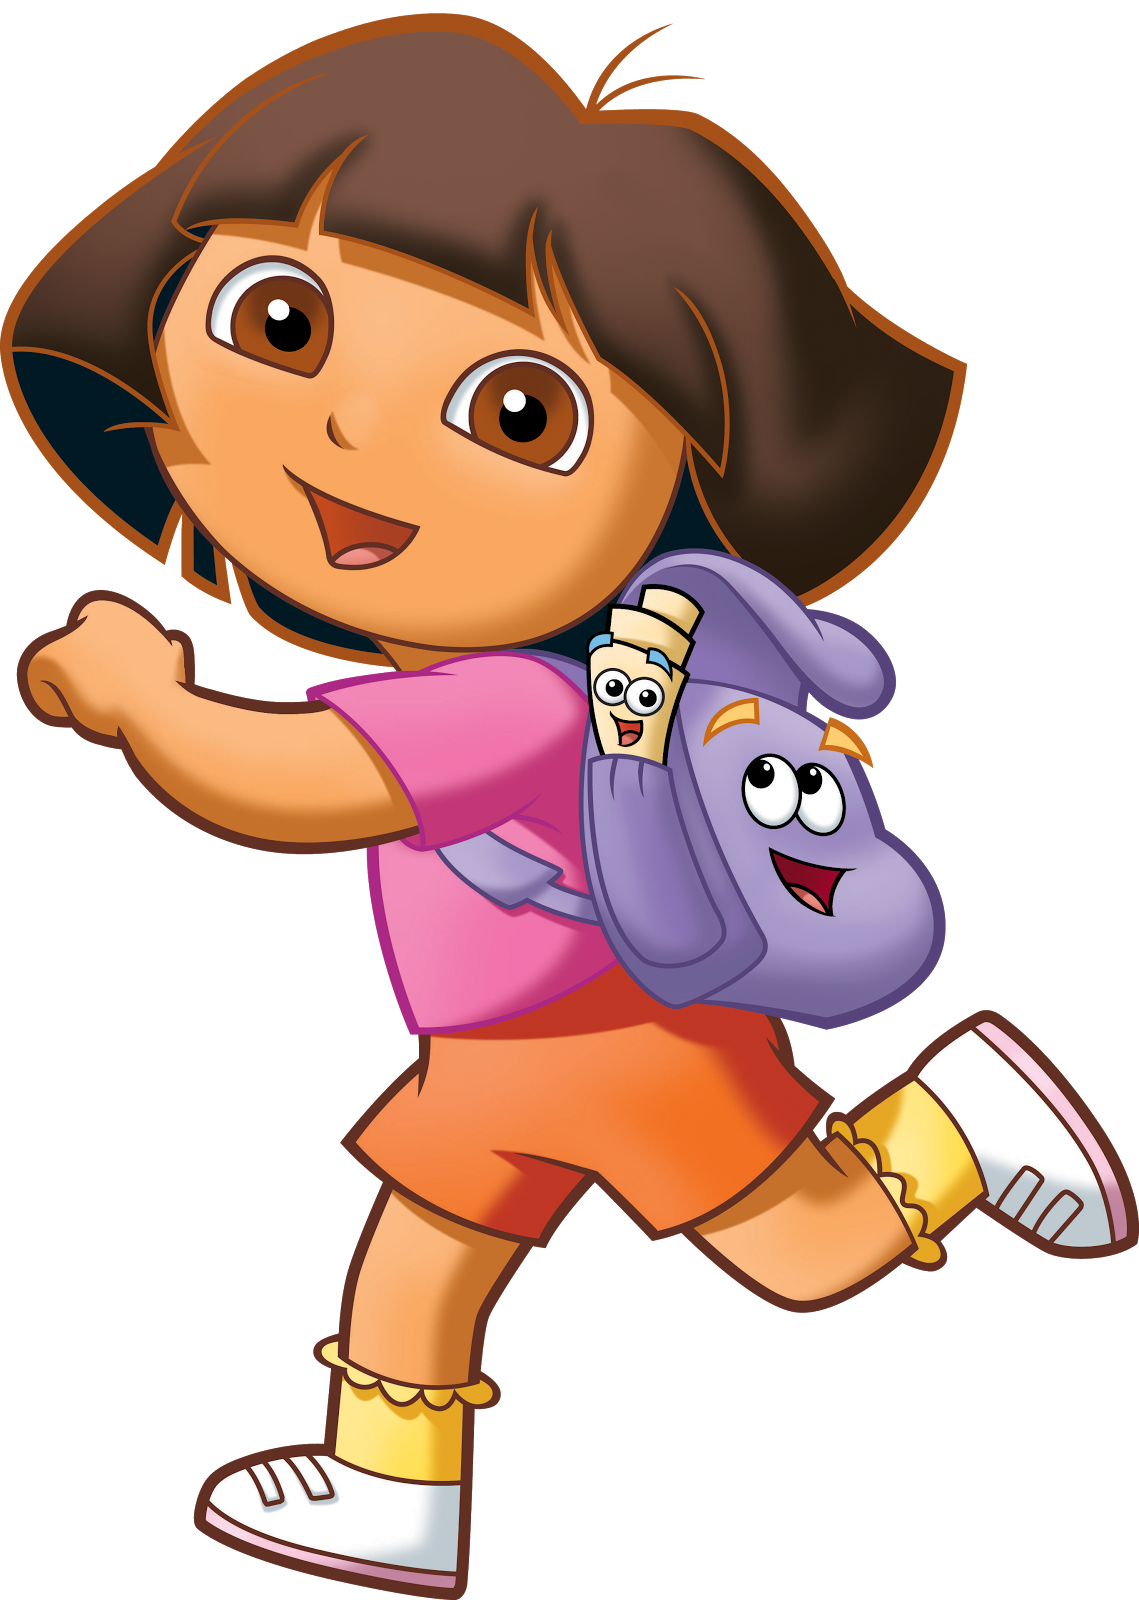 Dora The Explorer Cartoon PNG Transparent Image